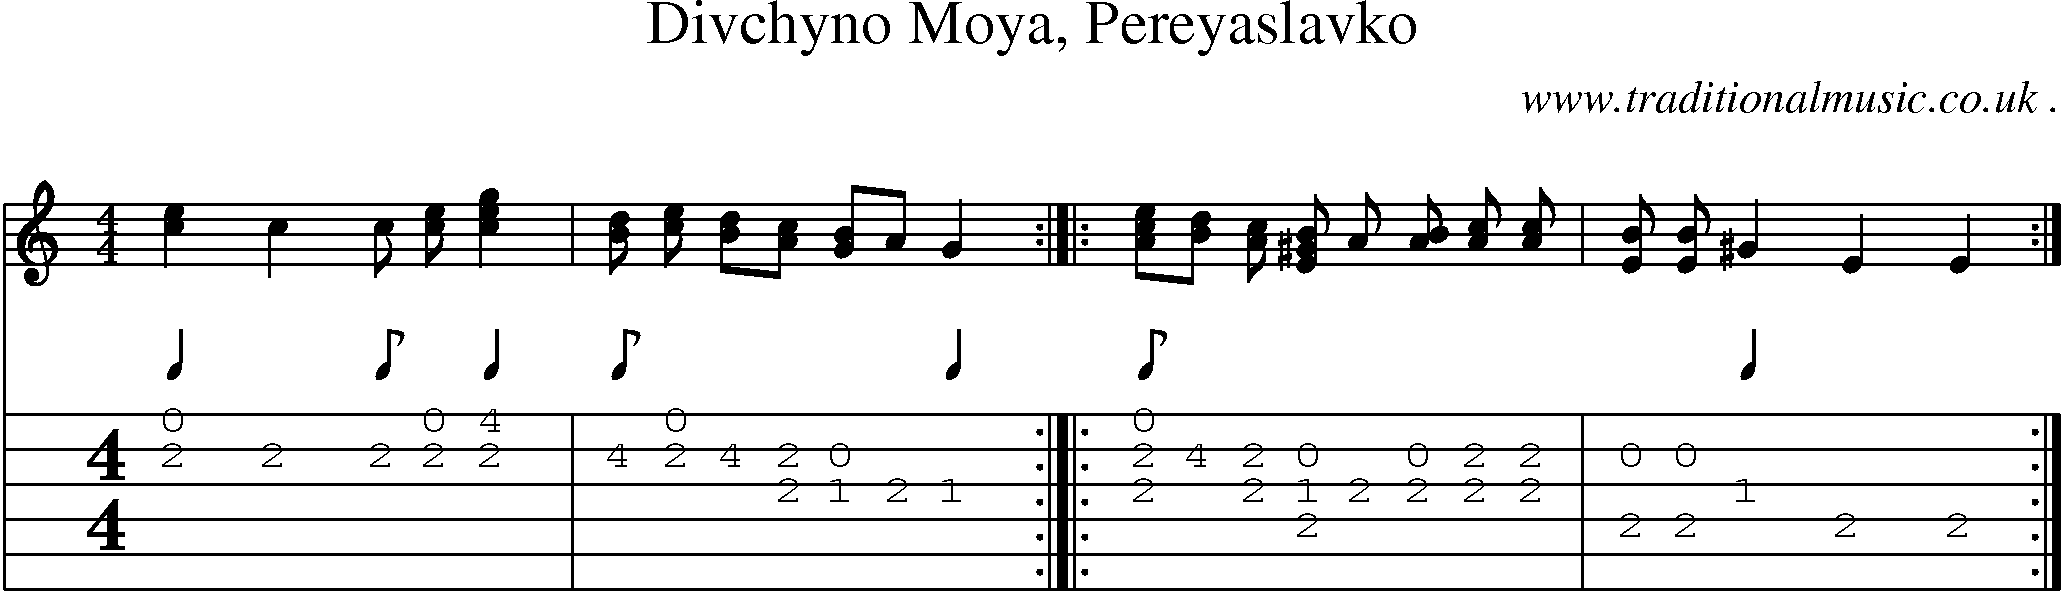 Sheet-Music and Guitar Tabs for Divchyno Moya Pereyaslavko